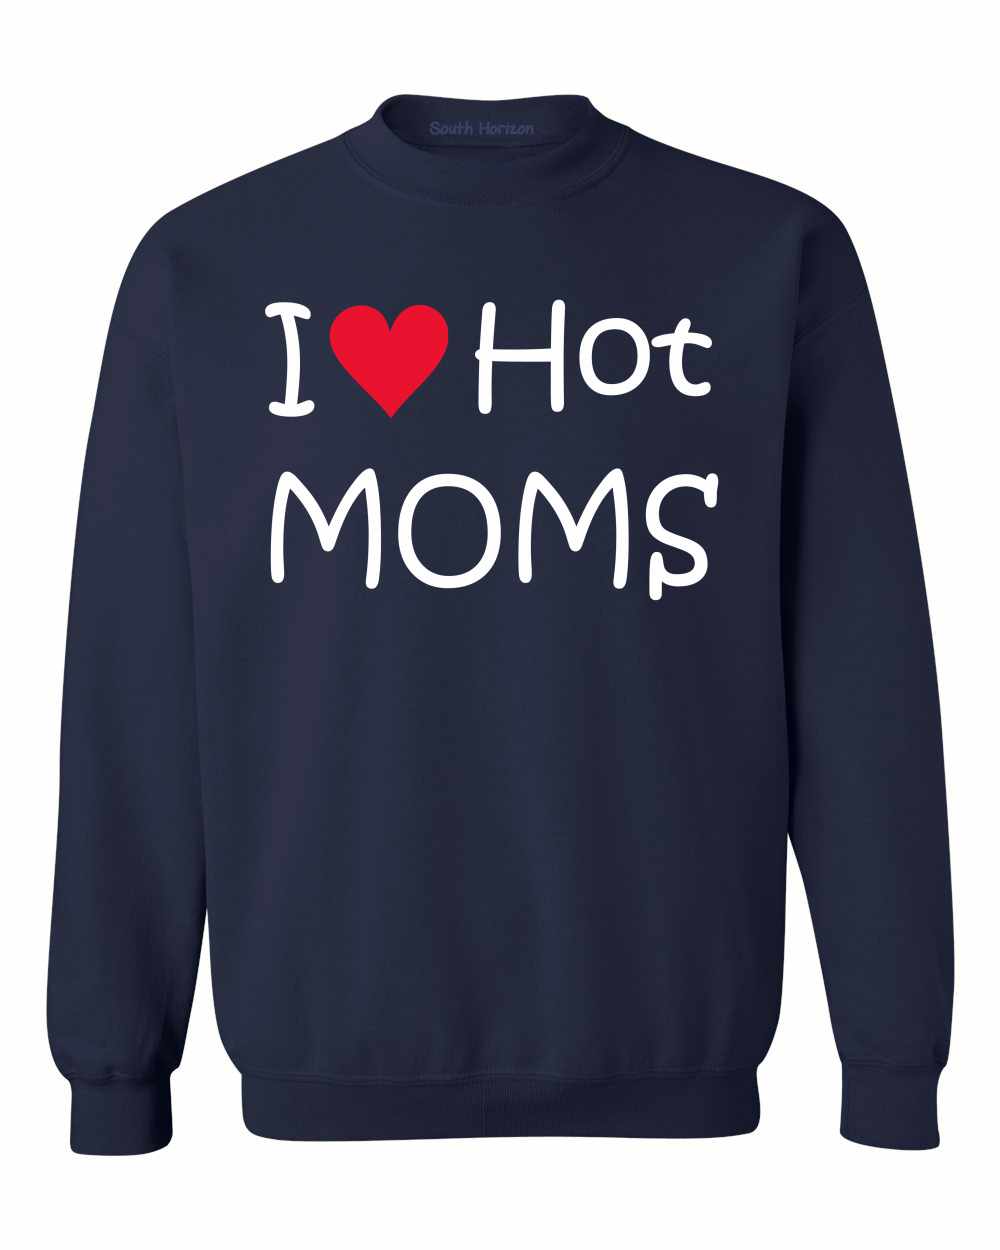 I LOVE HOT MOMS Sweat Shirt (#577-11)